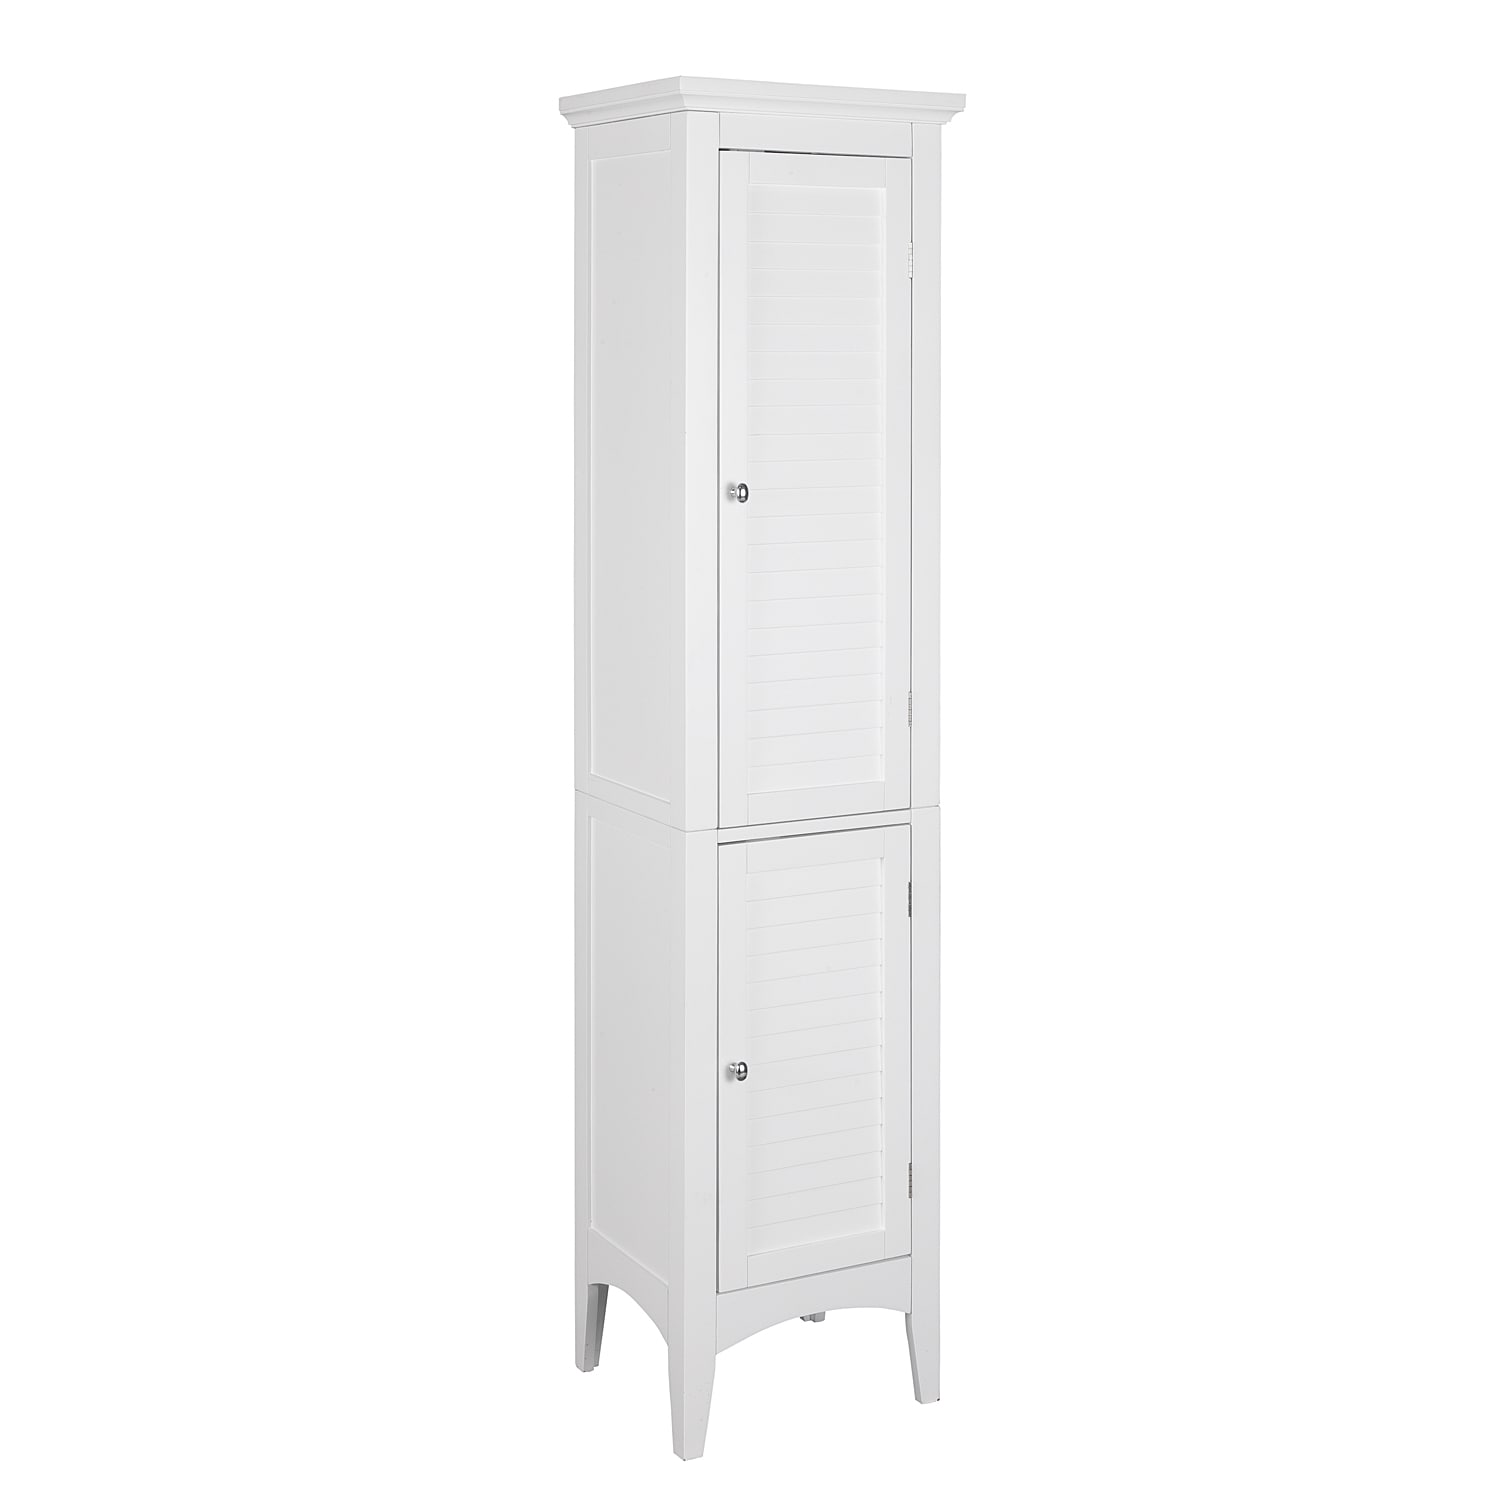 Bathroom Linen Storage Cabinet Freestanding Cupboard w/ Doors, Shelves,  White, 1 Unit - Fred Meyer